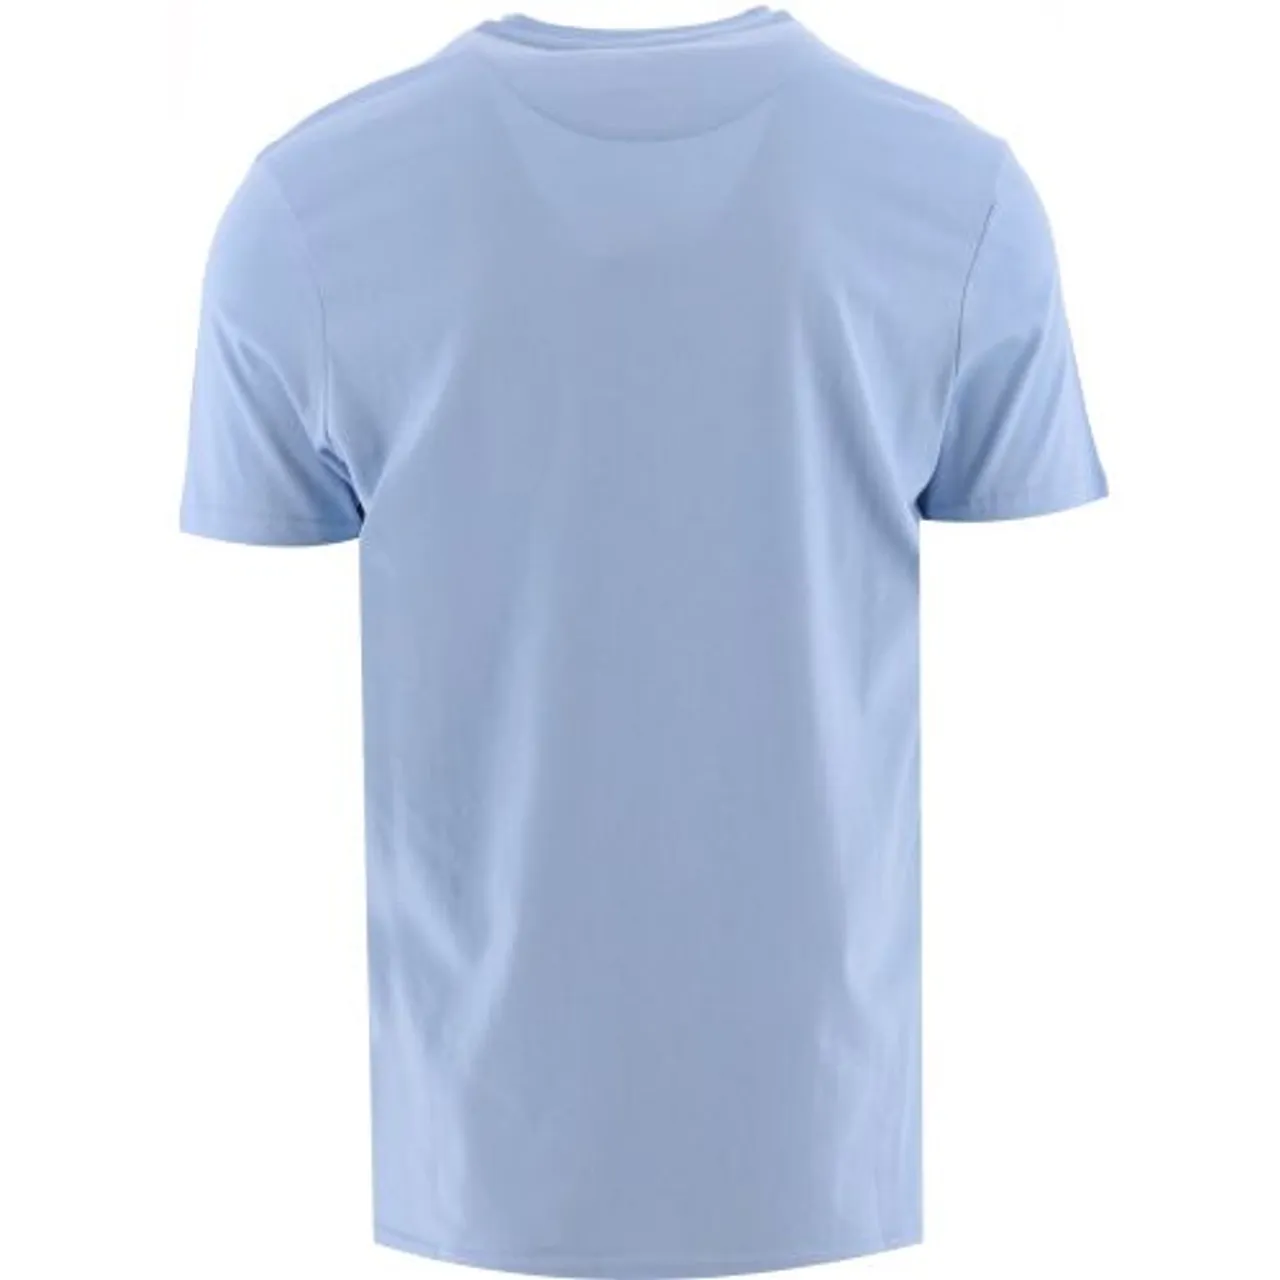 Lyle and Scott Mens Light Blue Plain T-Shirt